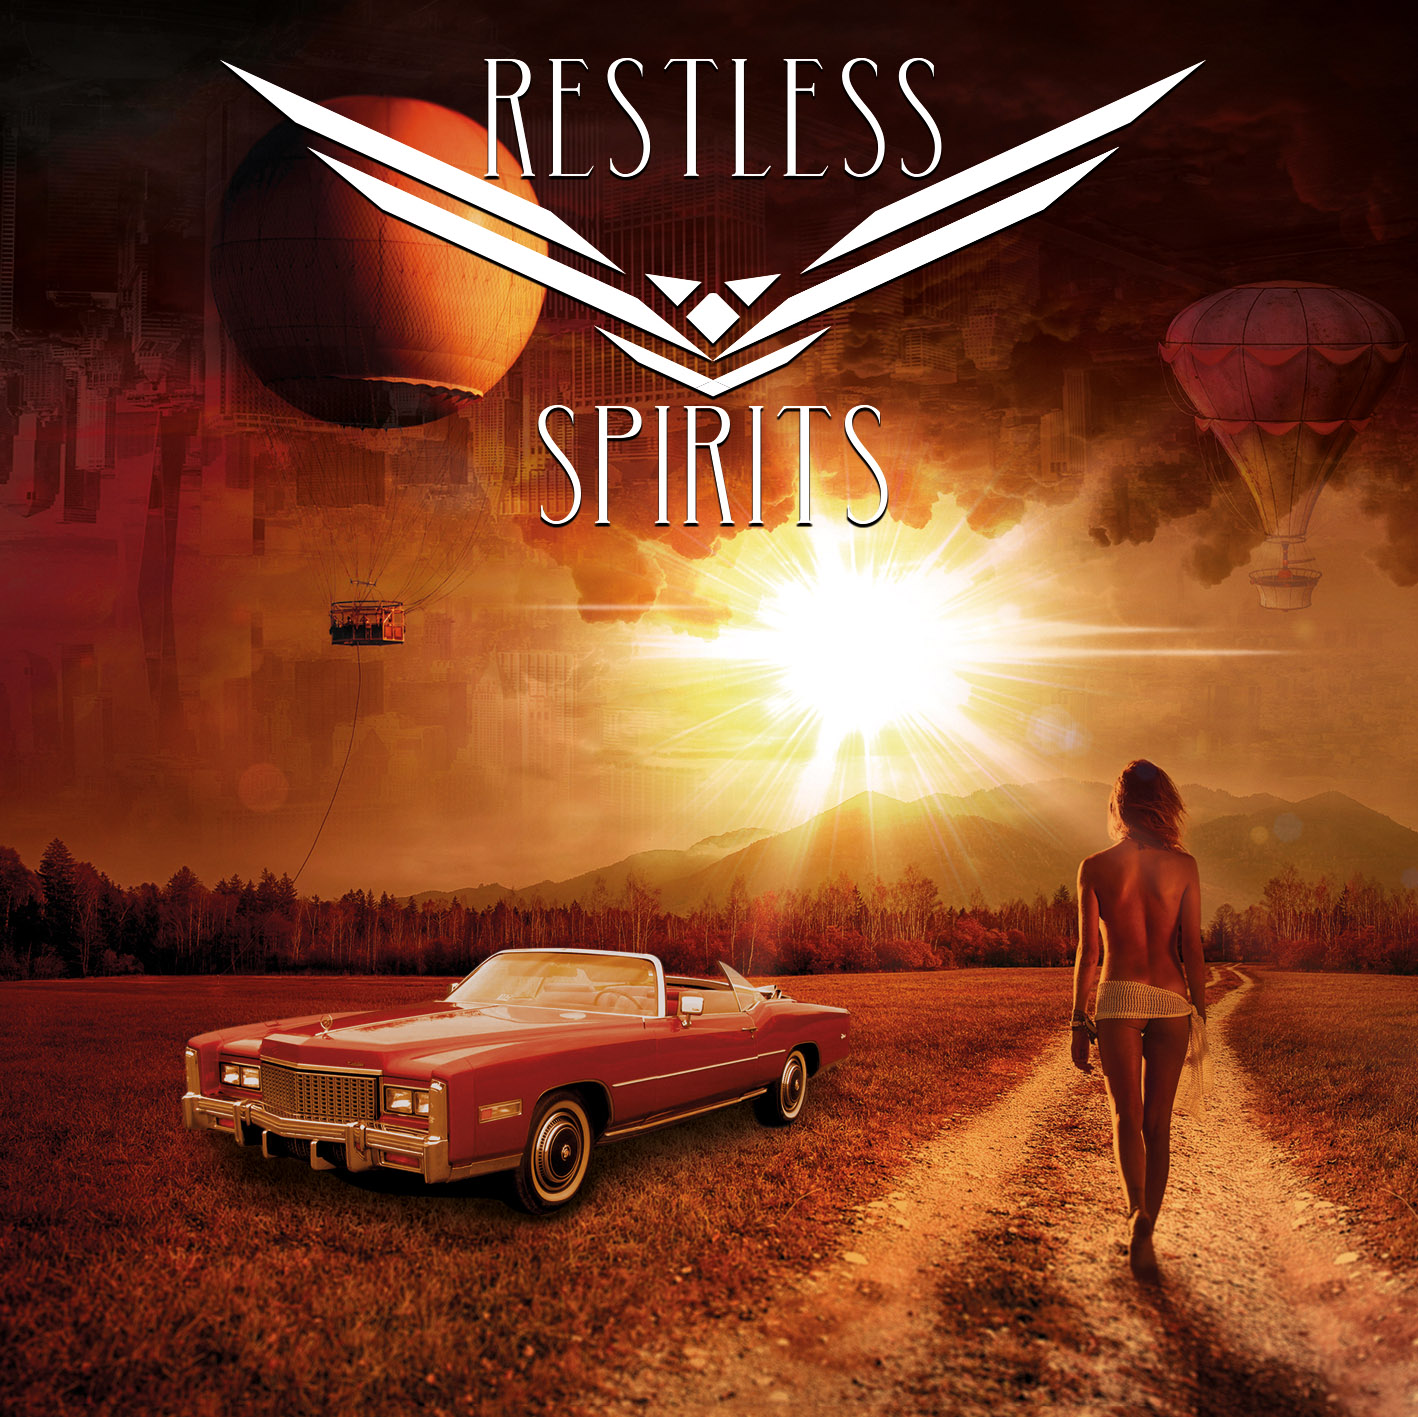 RESTLESS SPIRITS Featuring Tony Hernando - “Restless Spirits”